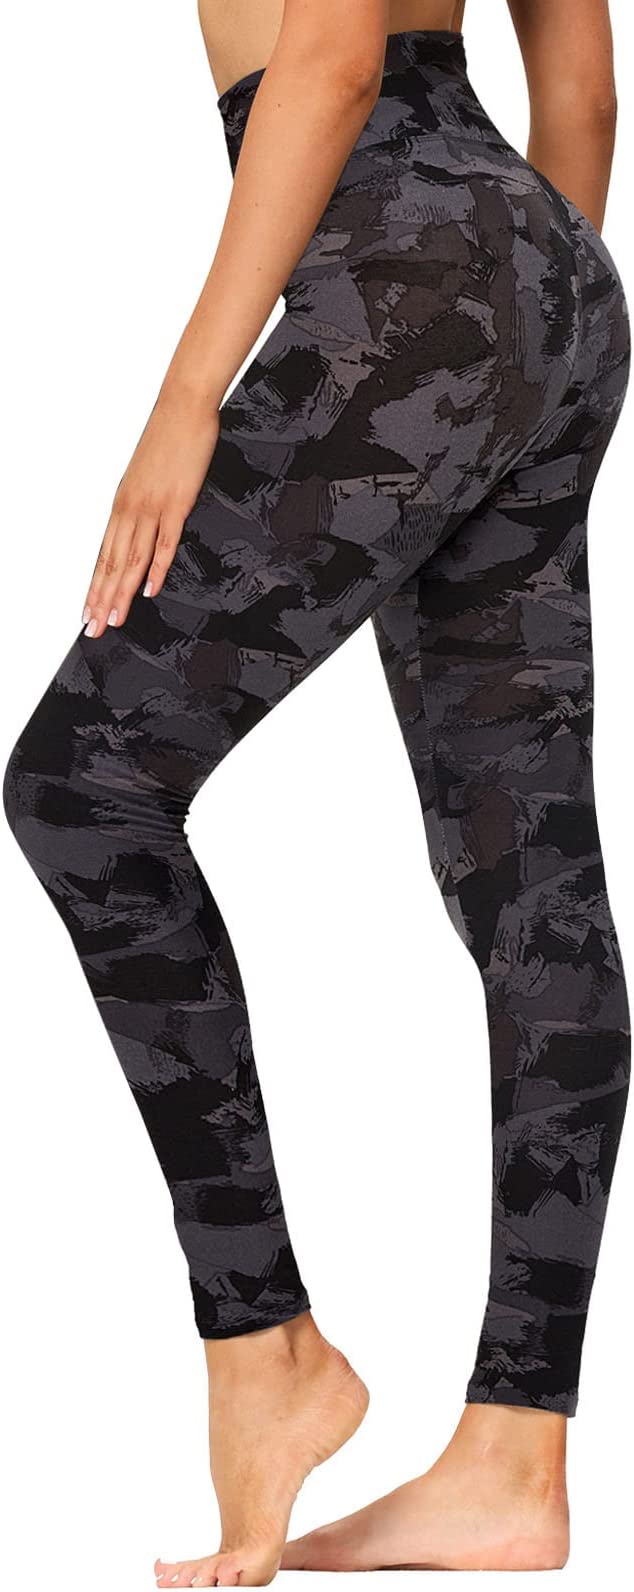 Wholesale High Waisted Black Camo Leggings Soft Slim Tummy Control Printed Pants